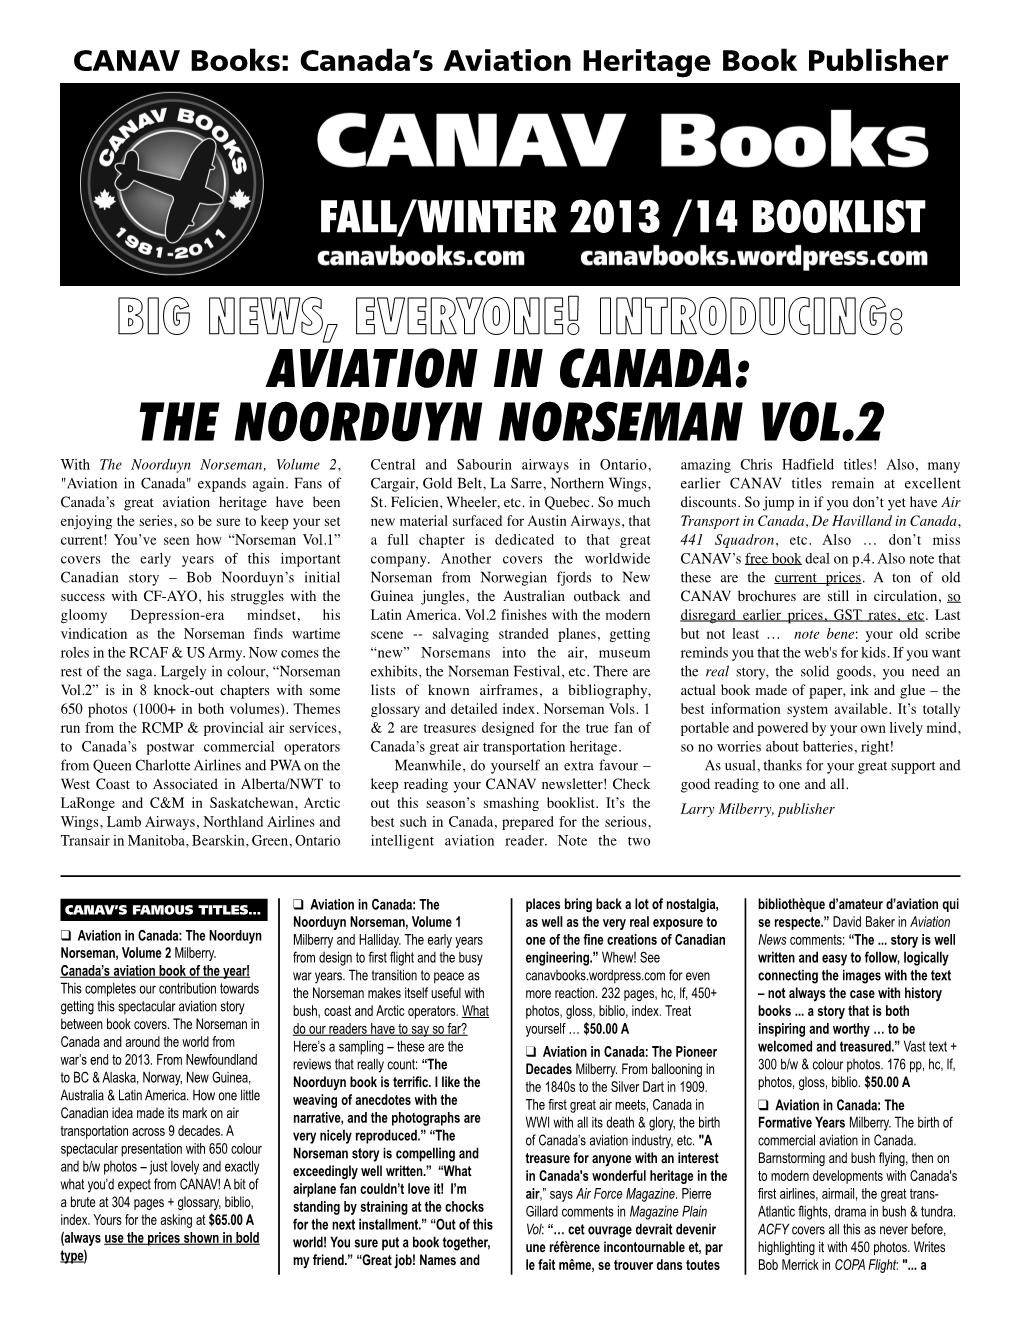 Aviation in Canada: the Noorduyn Norseman Vol.2